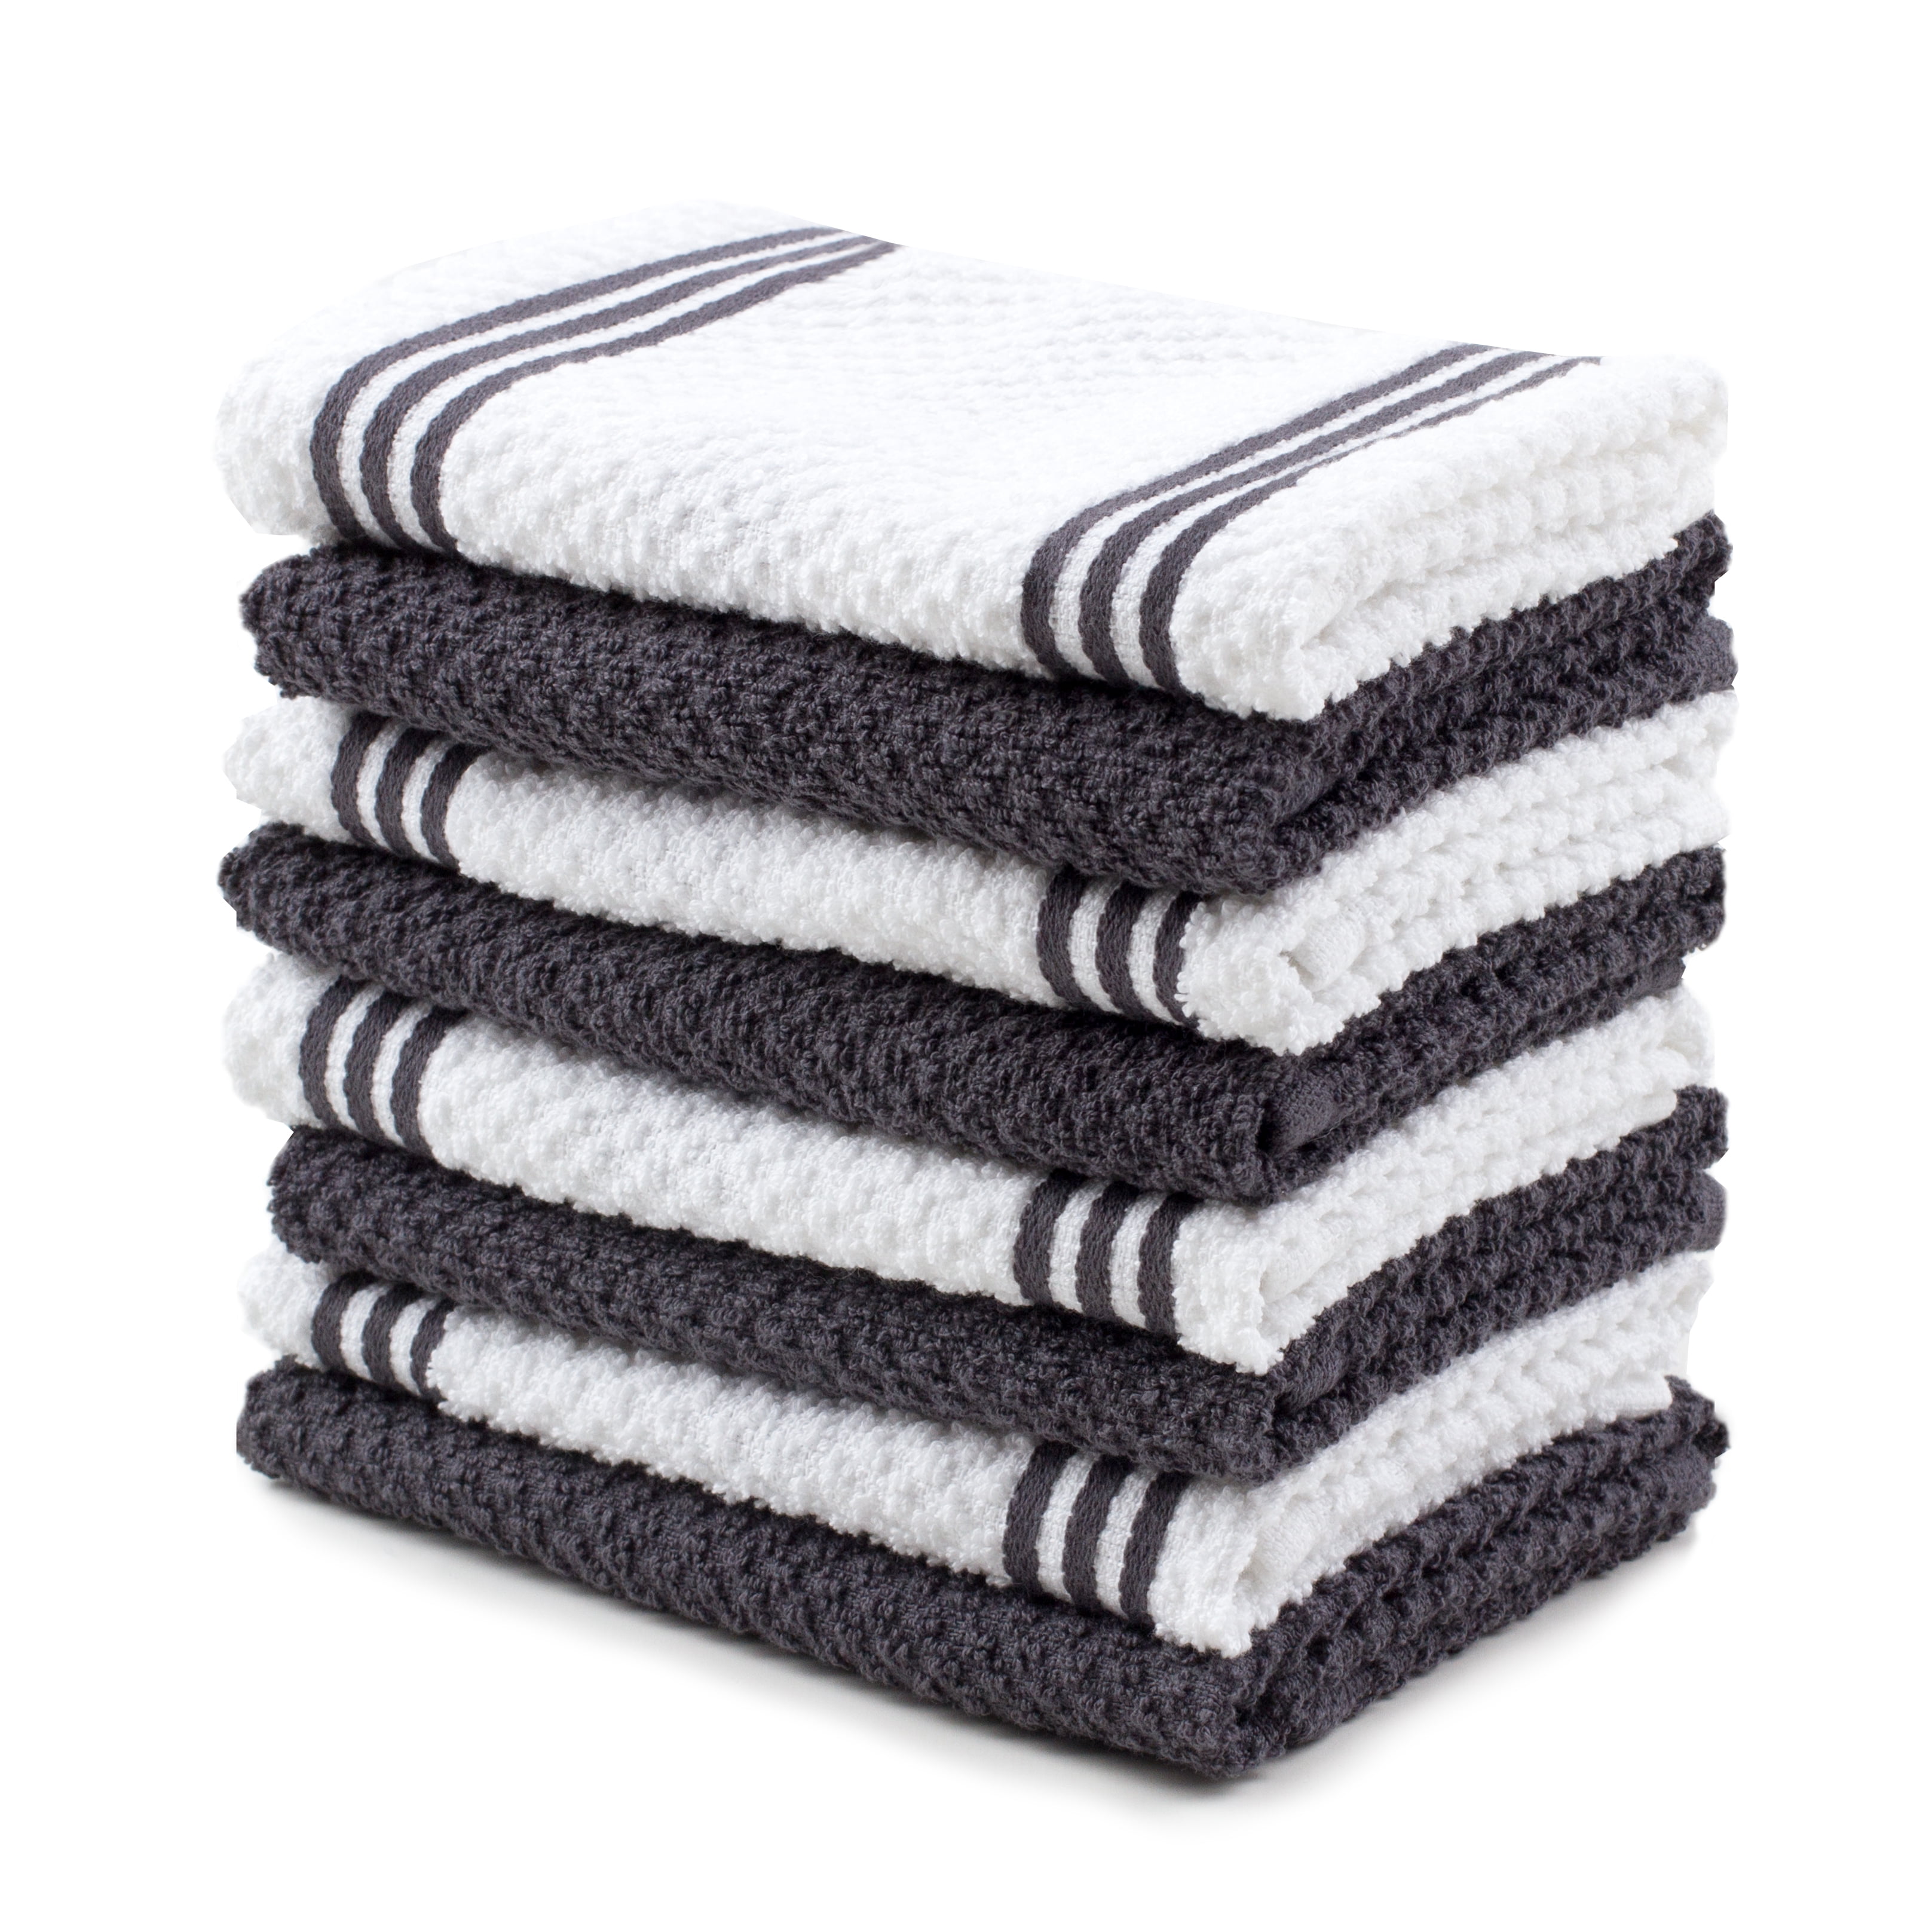 Egles Kitchen Dish Cloth 100 Cotton Dishcloths Square Terry Towel 12x12inch 12pcs